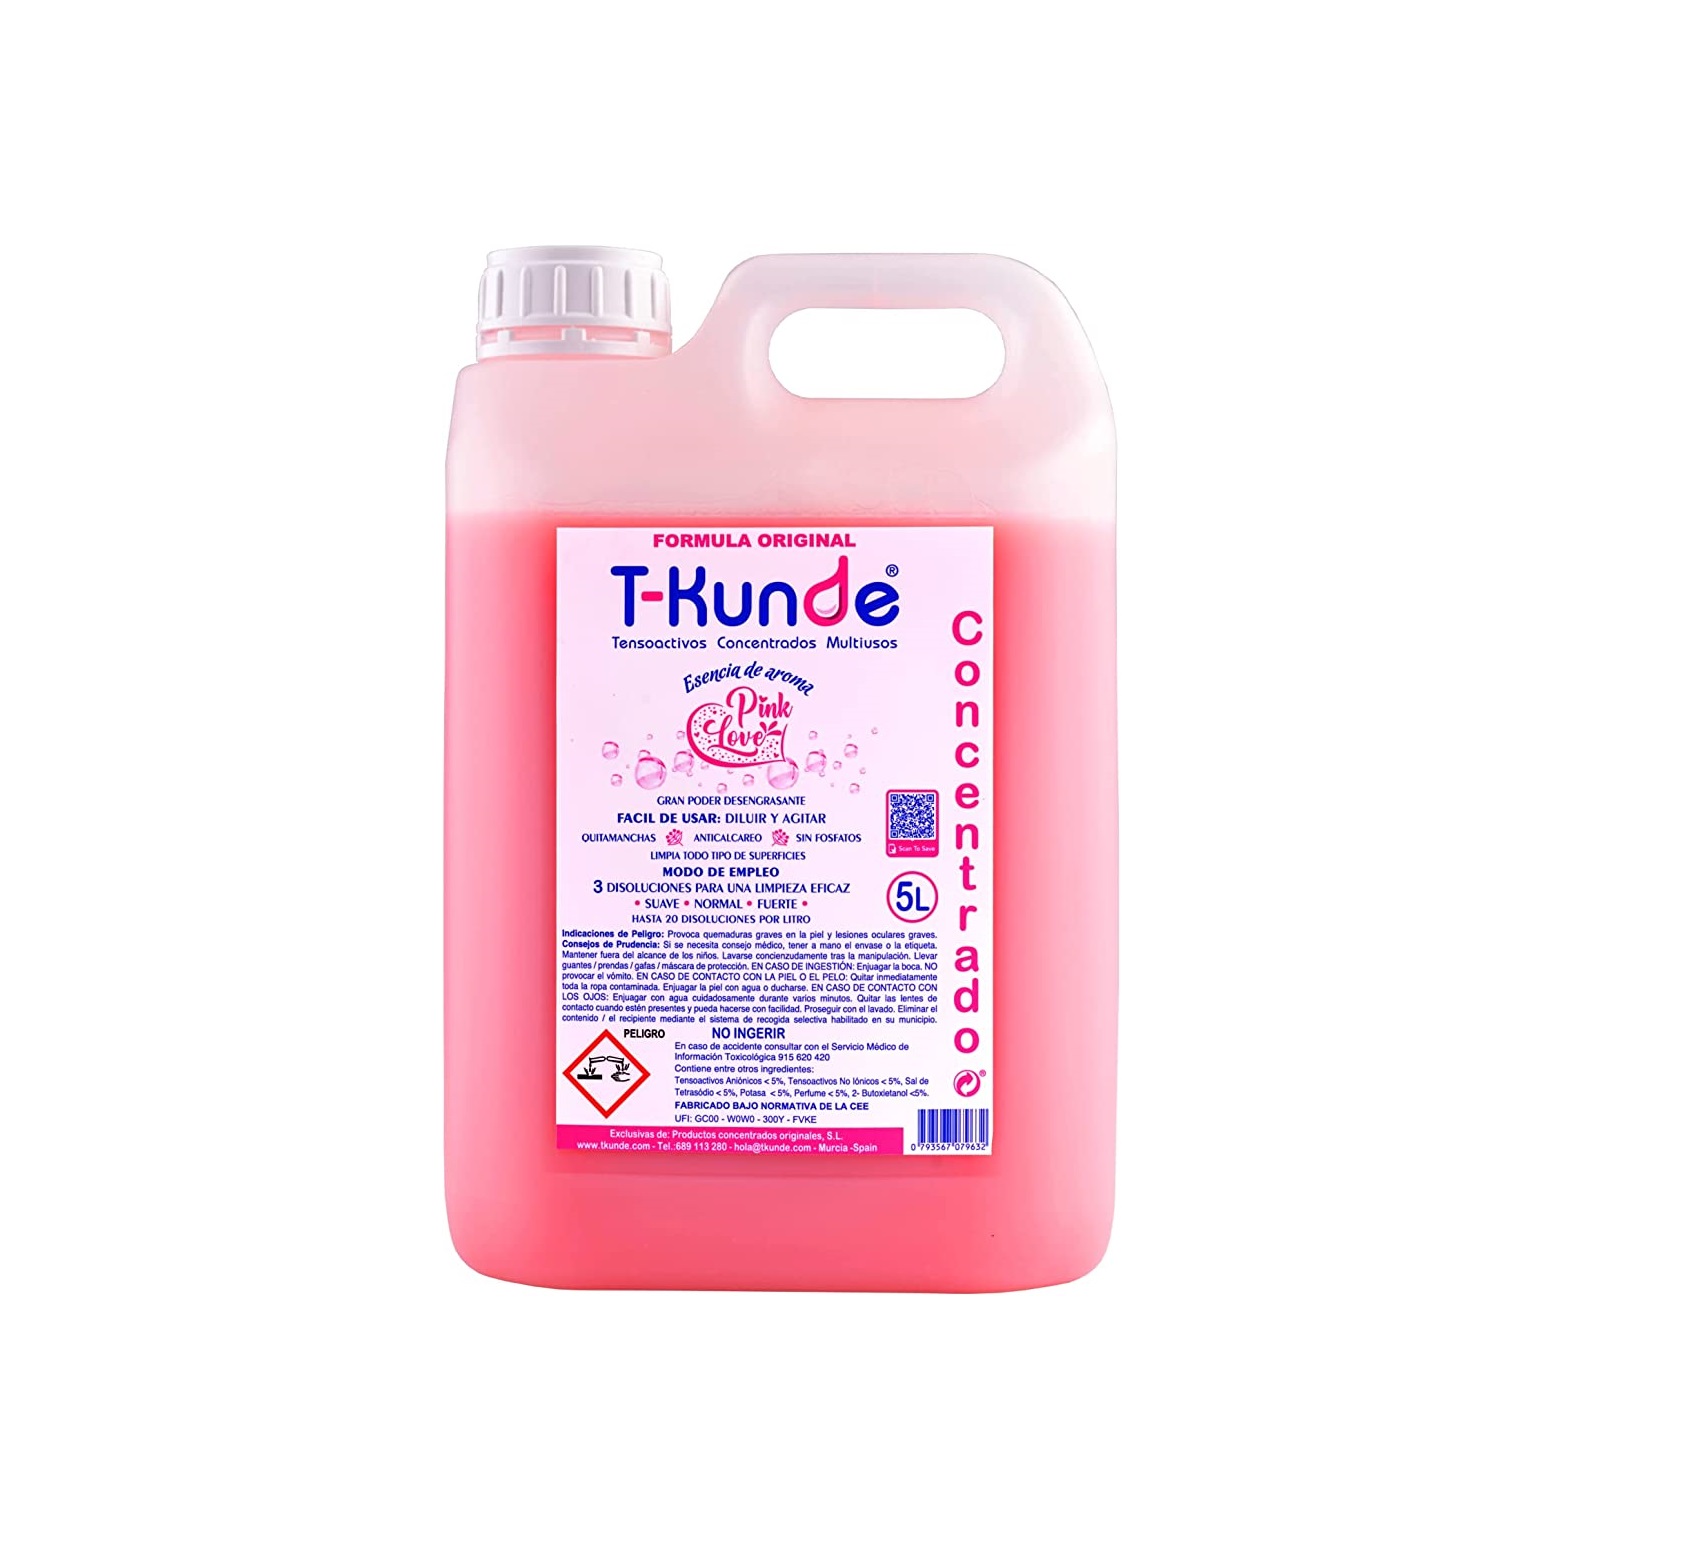 T-Kunde Pink 5 litros + 3 Vaporizadores